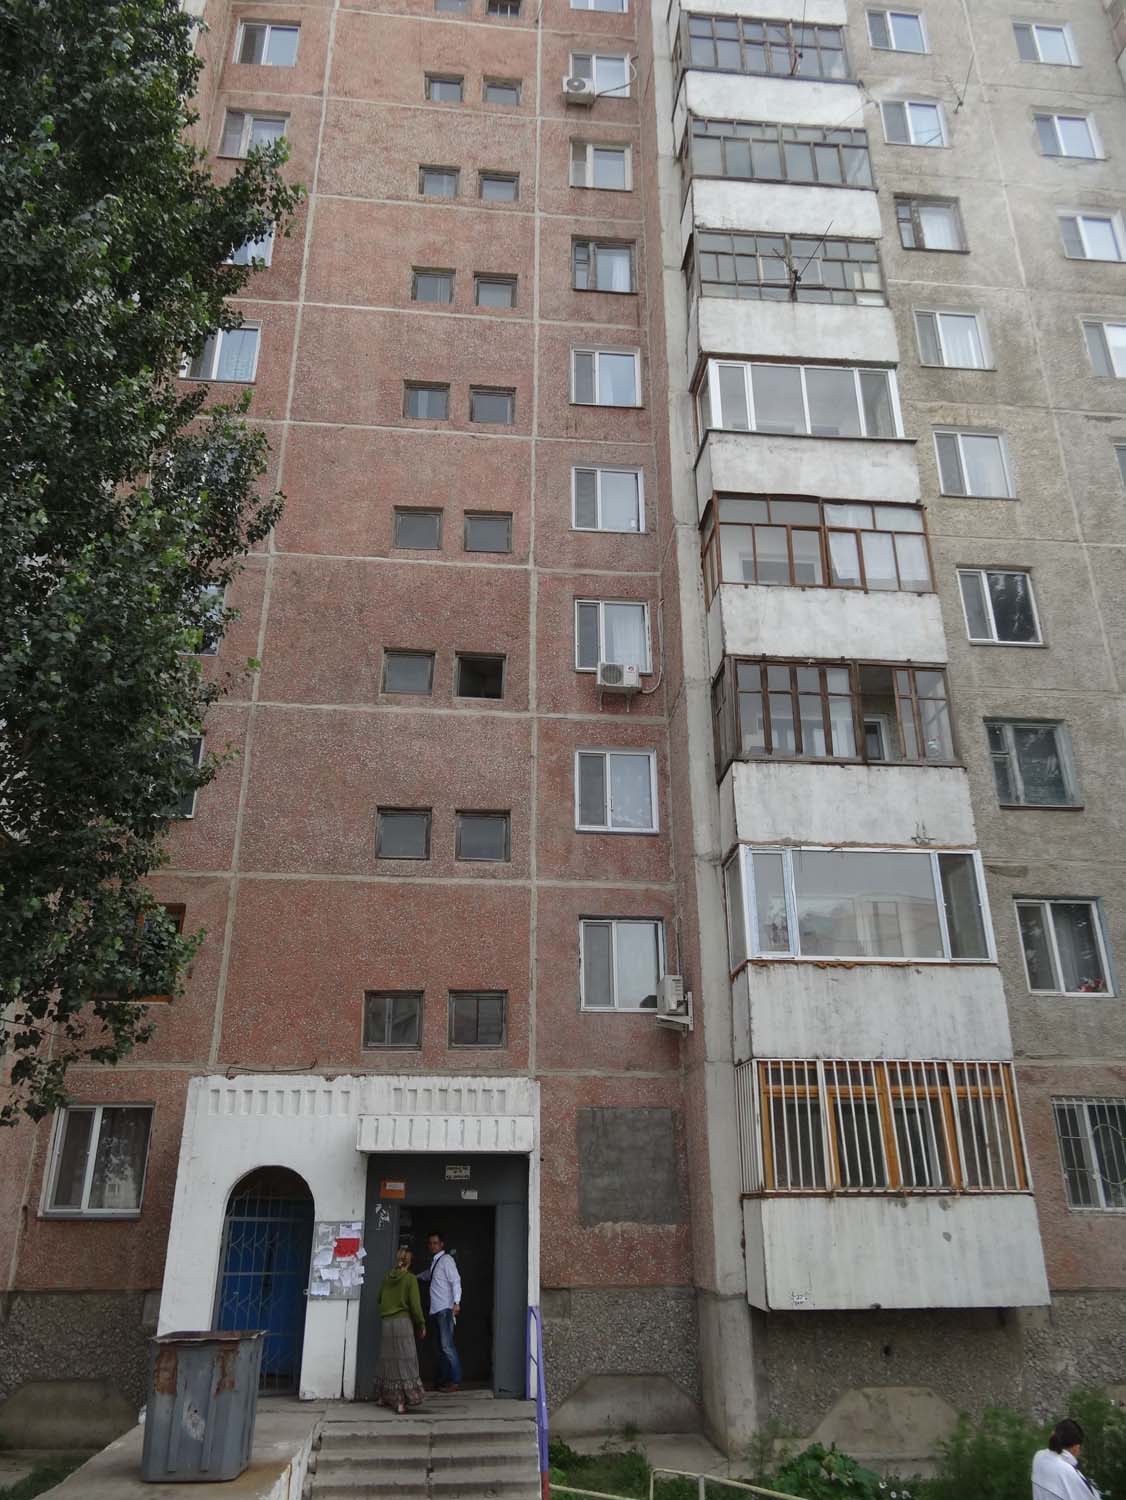 Baurzhan's parents live inside this apartment block